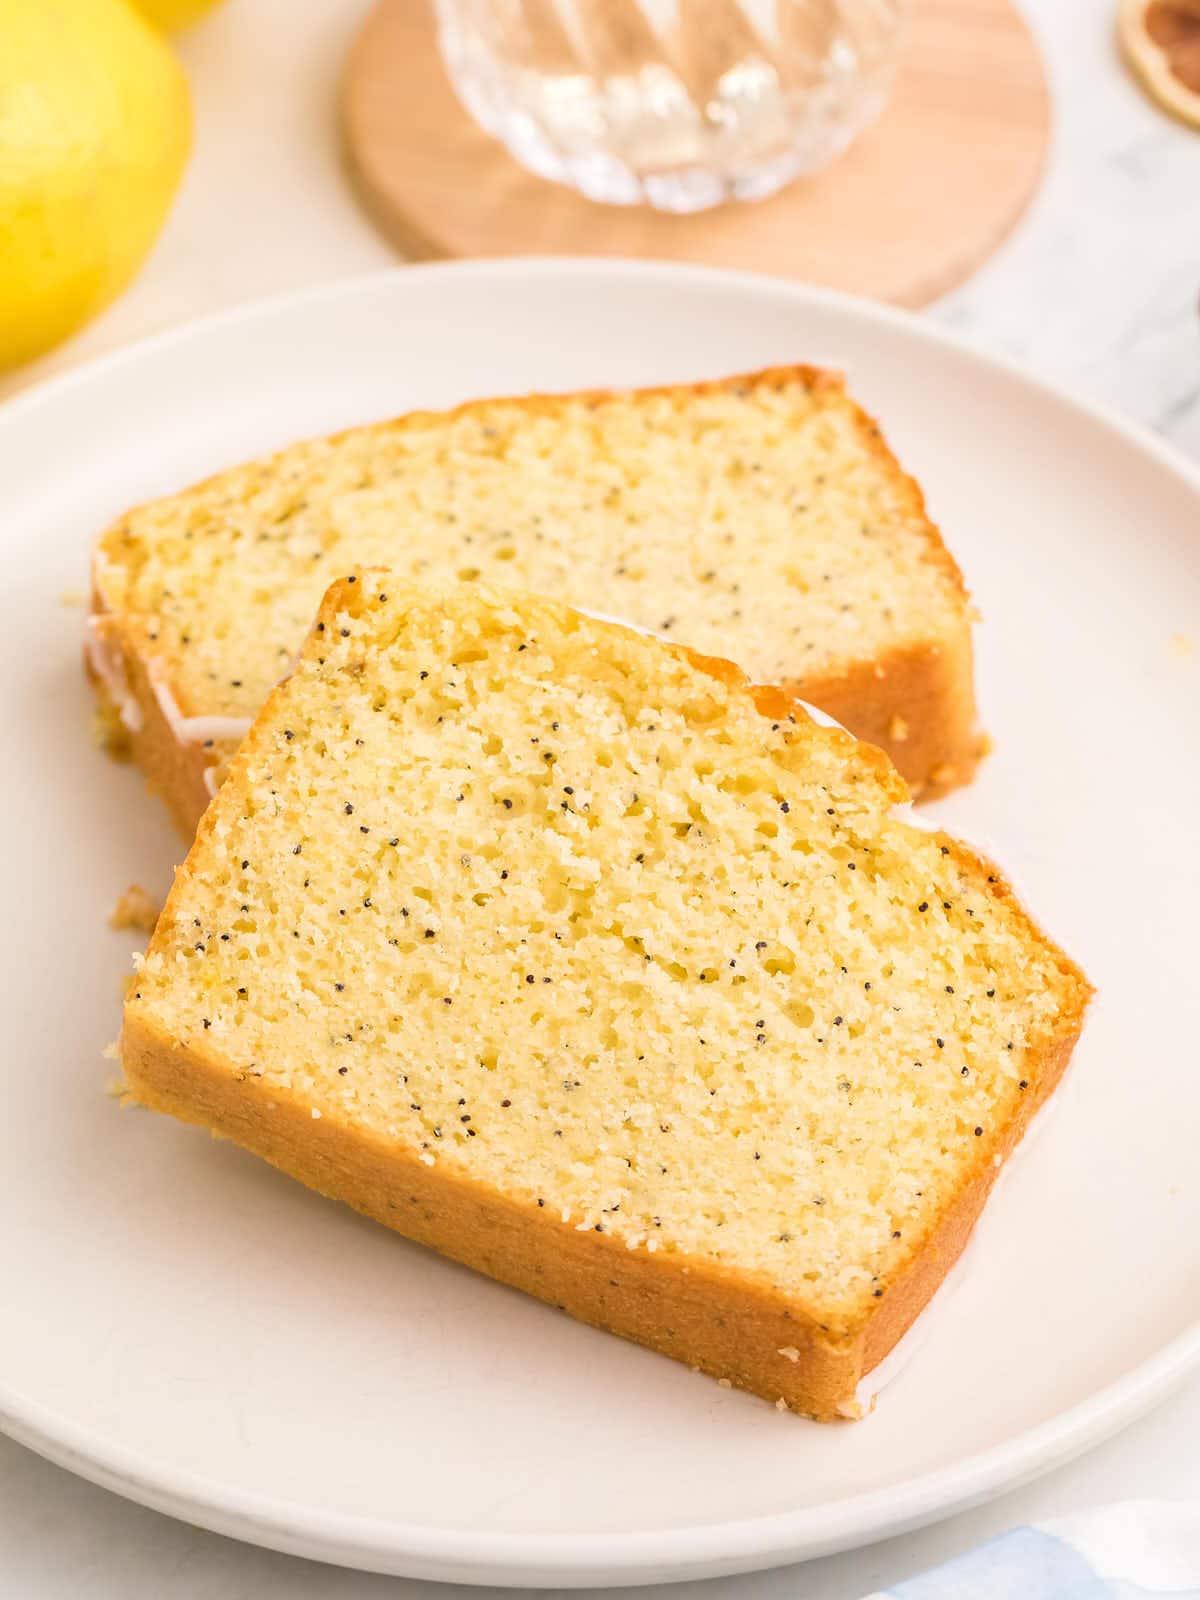 Lemon poppy seed bread on a white plate.